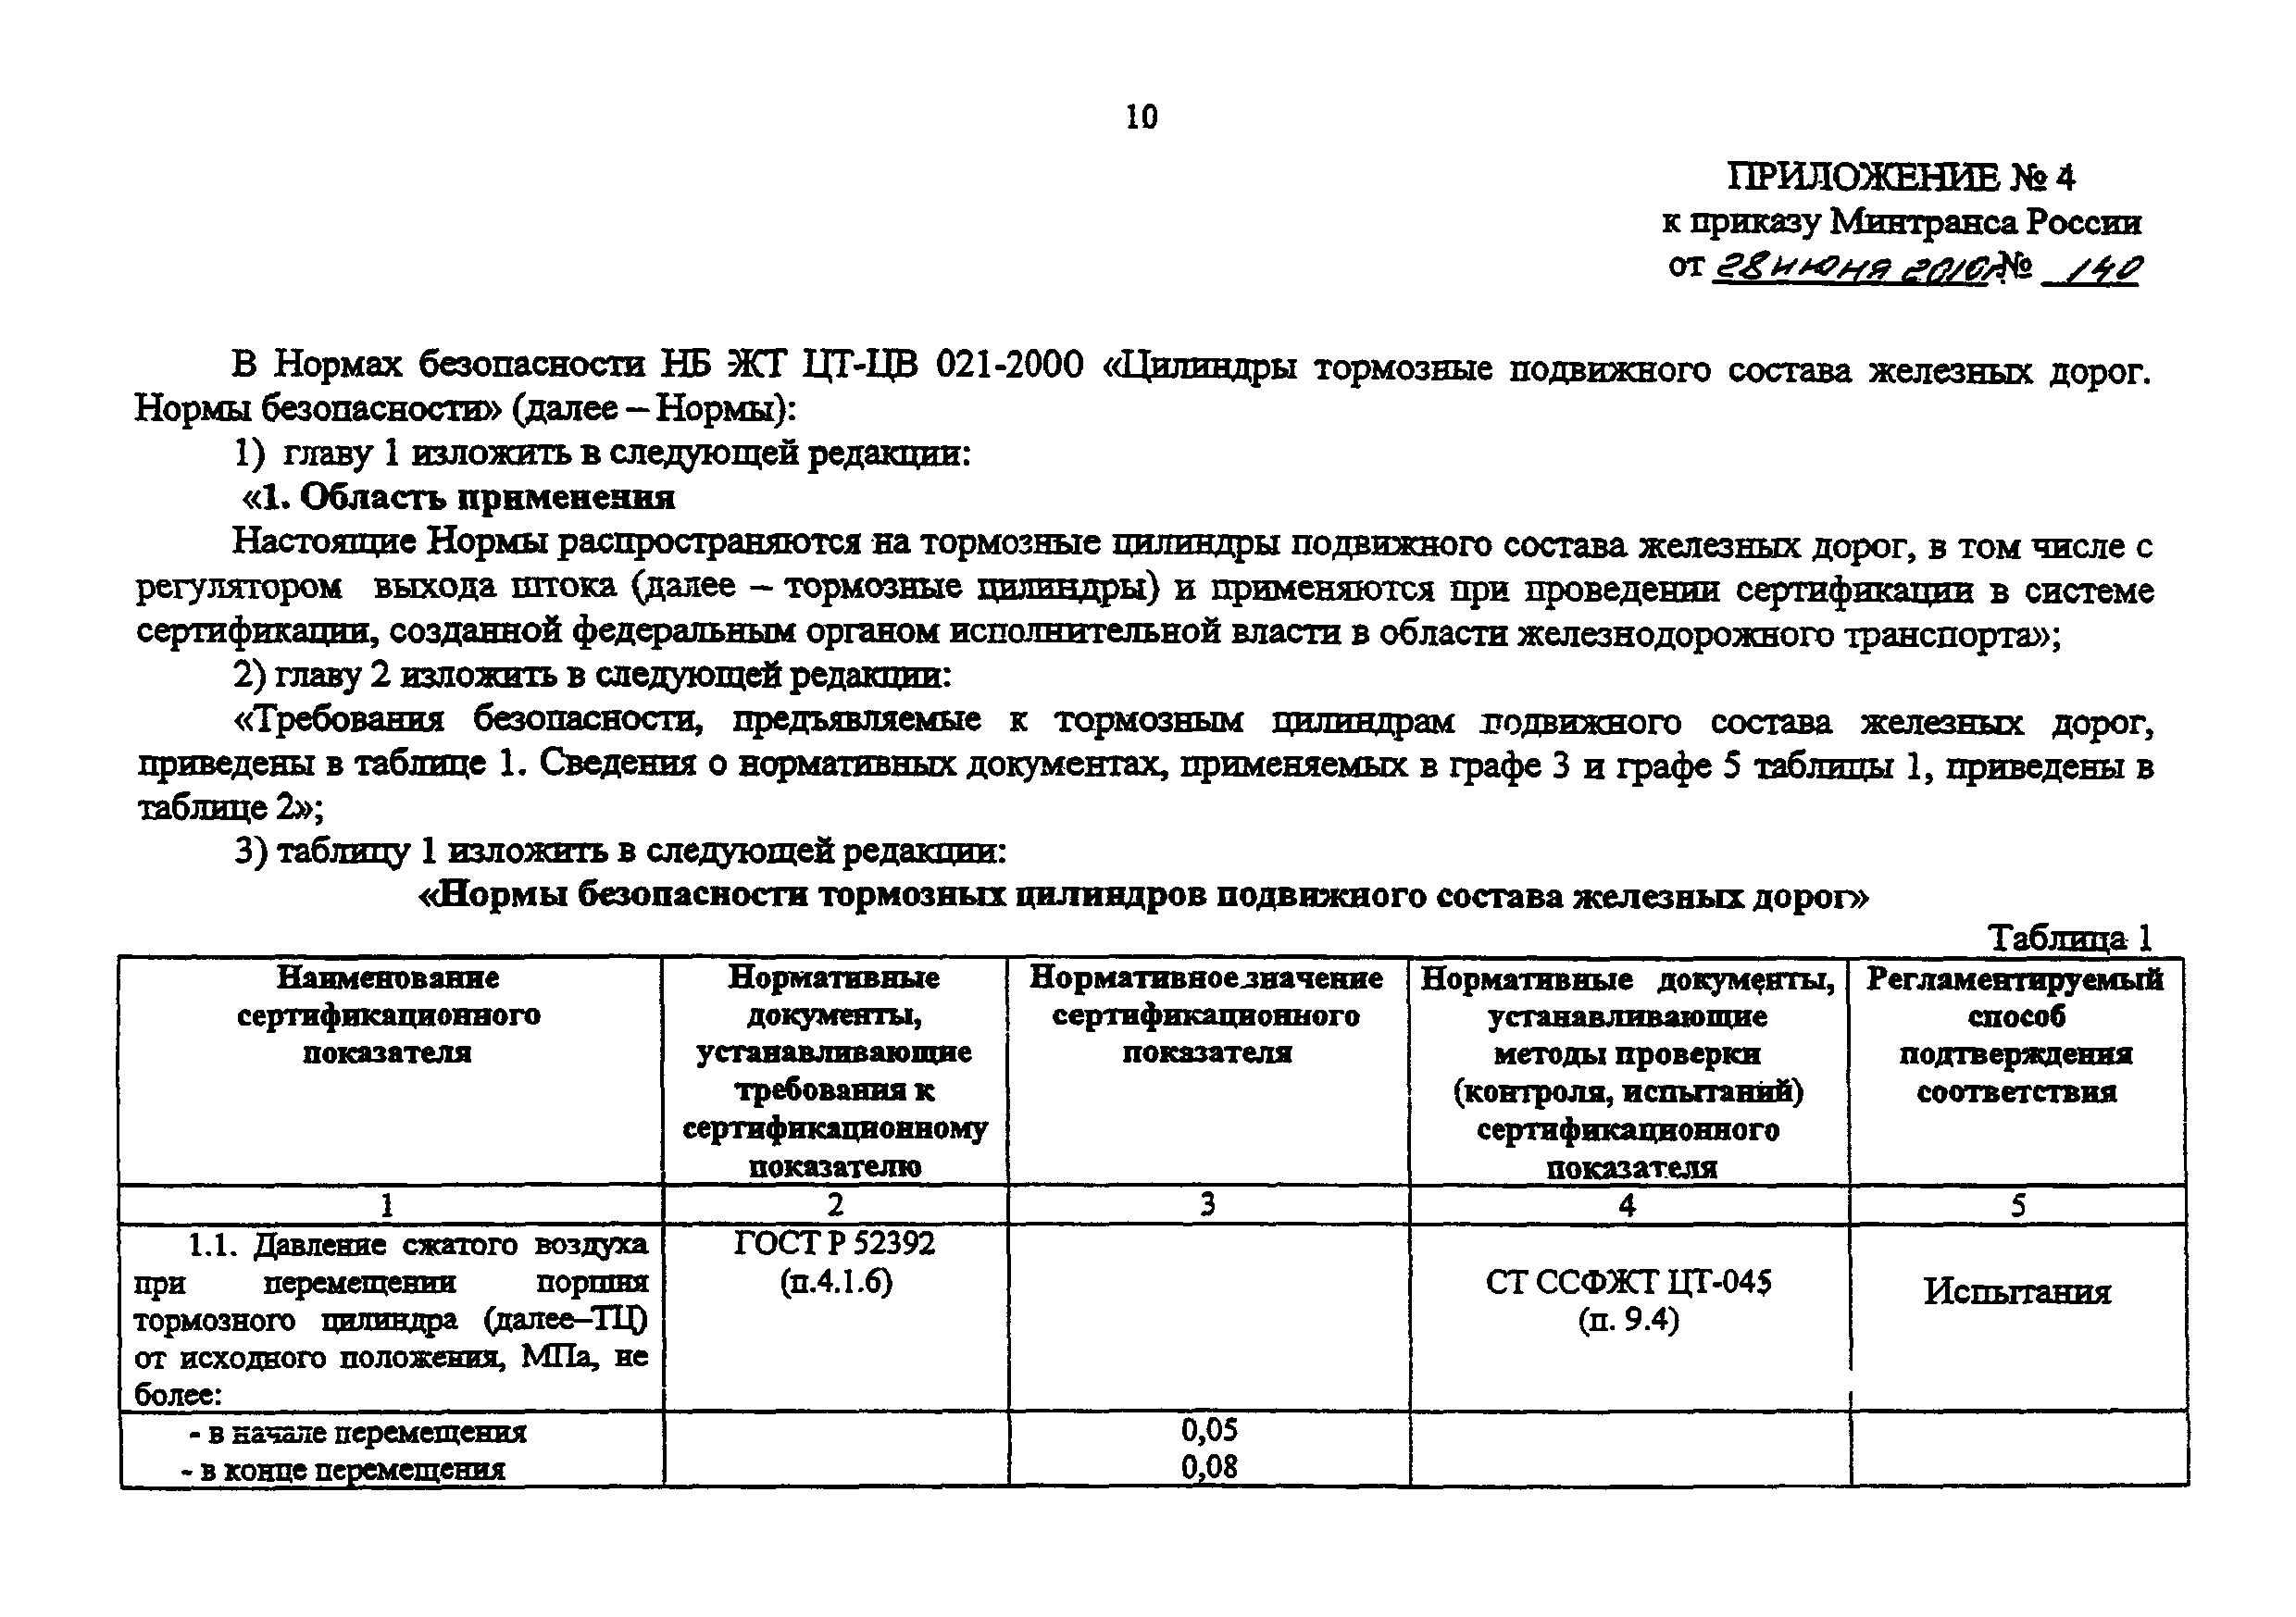 НБ ЖТ ЦТ-ЦВ 021-2000